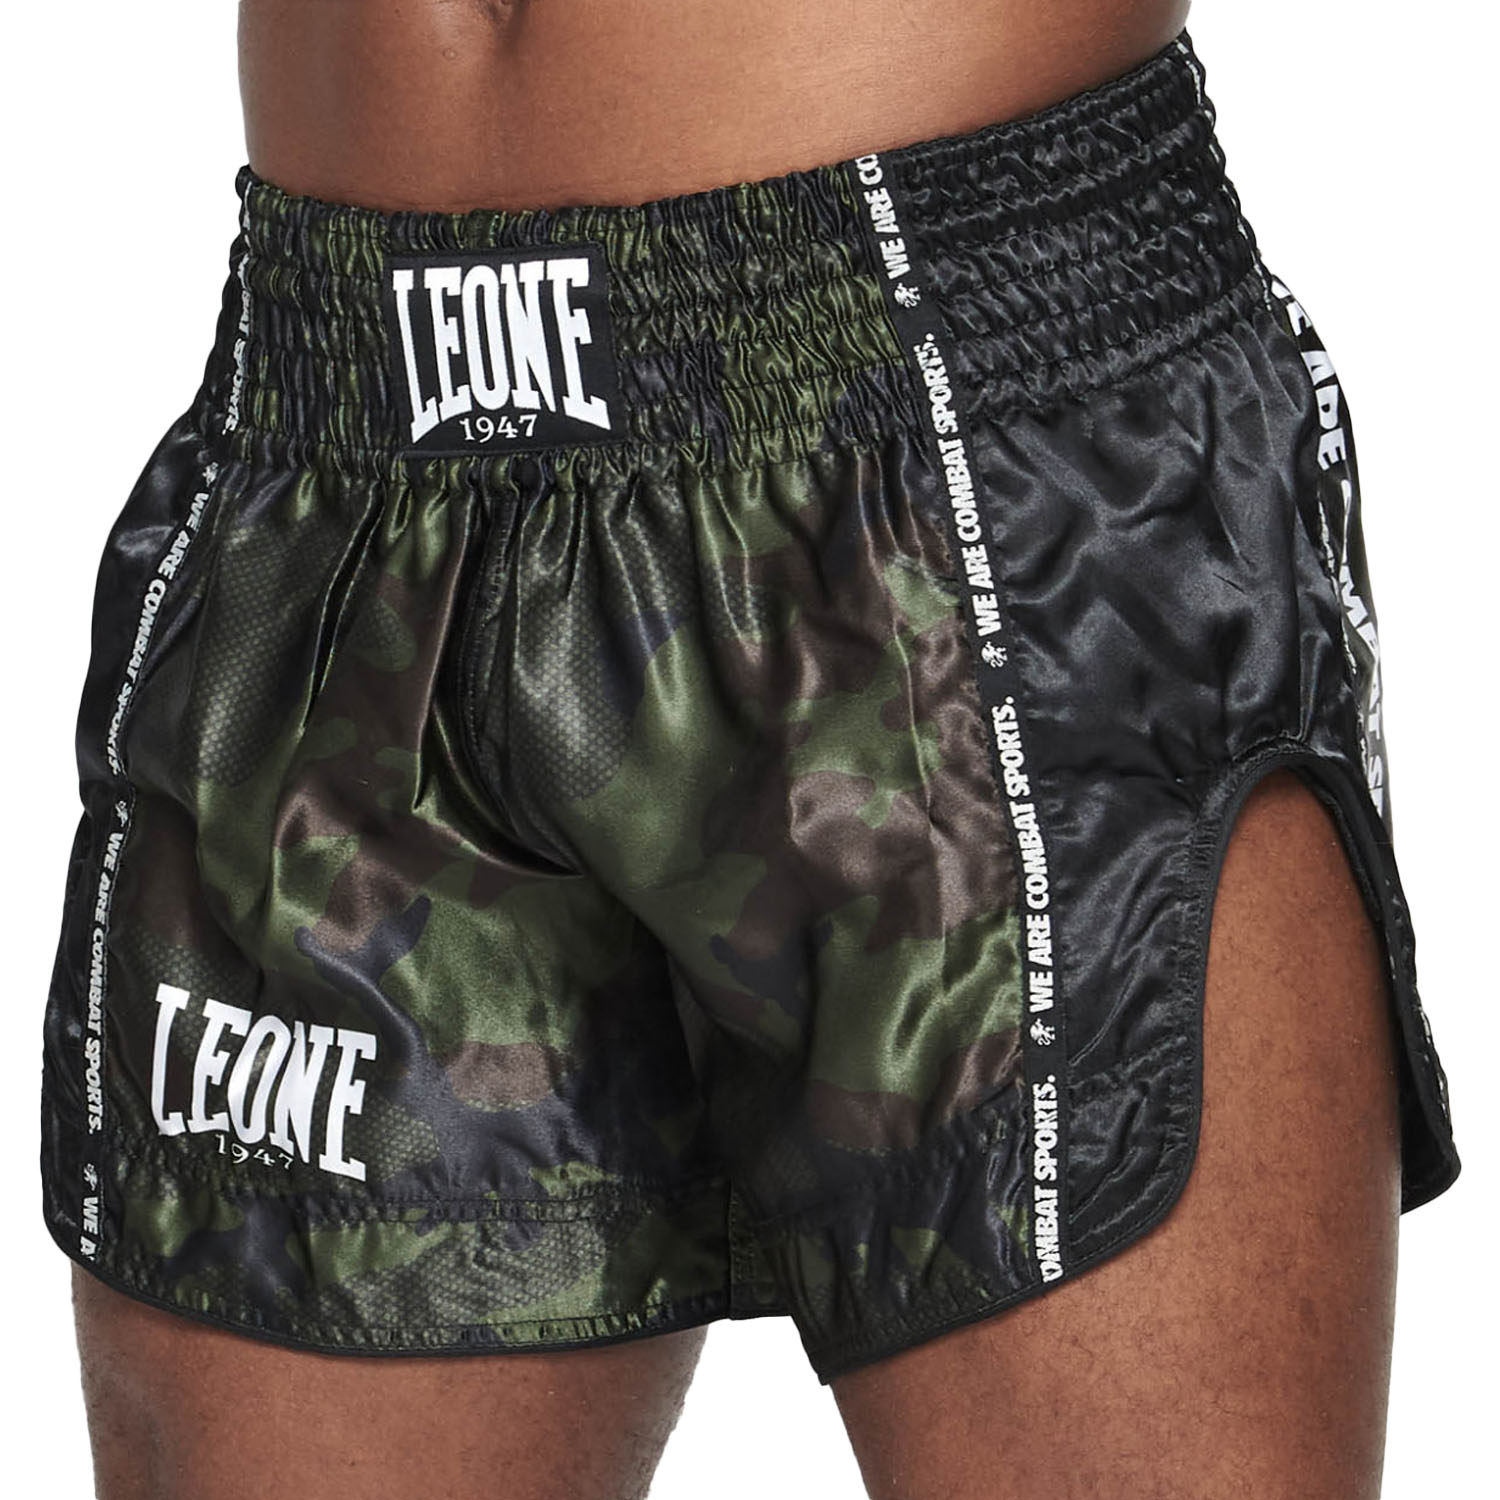 LEONE Muay Thai Shorts, AB961, camo-grün